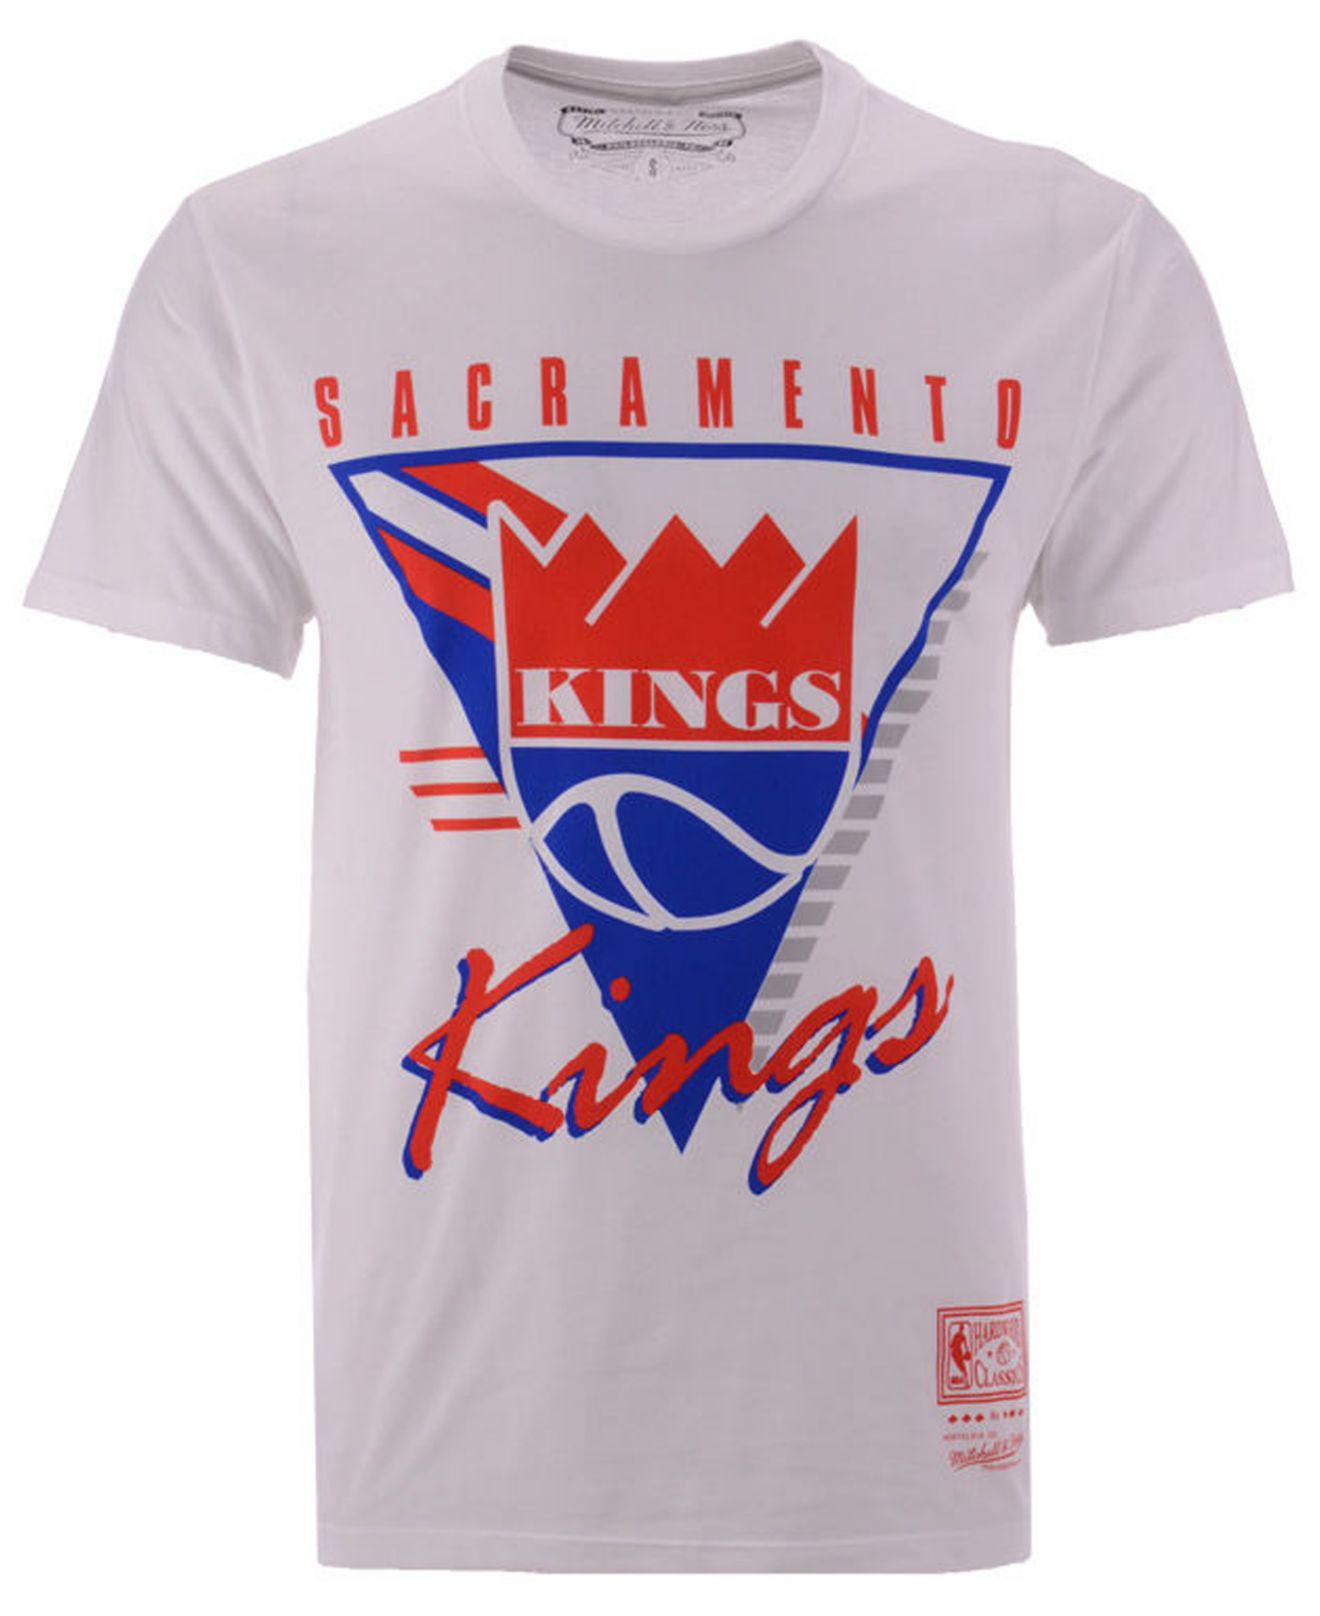 sacramento kings t shirt